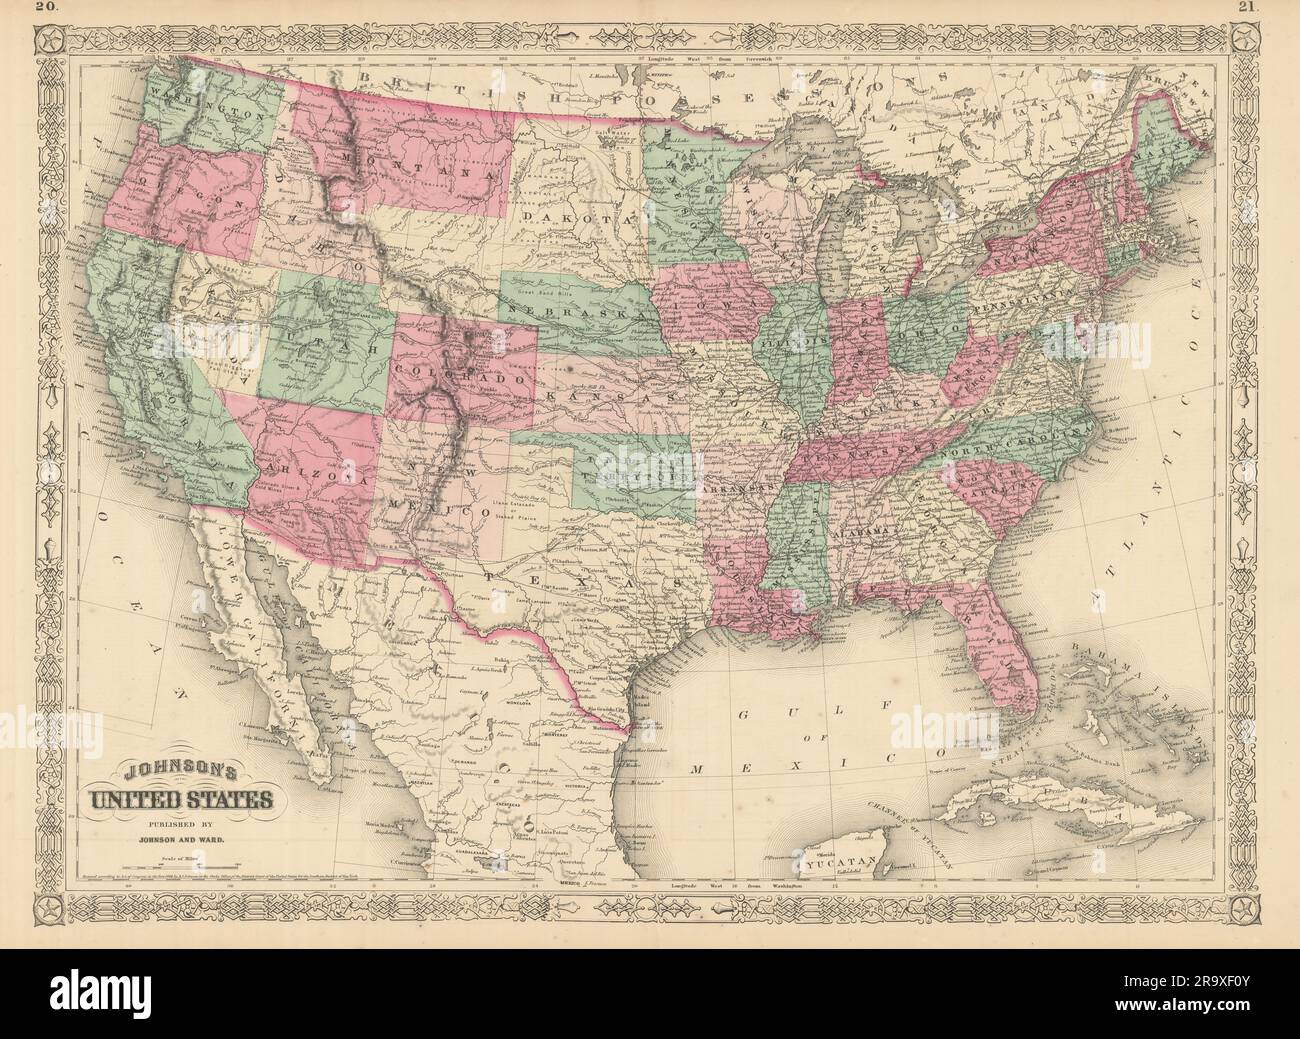 Johnson's United States. Wyoming part of Dakota Territory 1866 old antique map Stock Photo